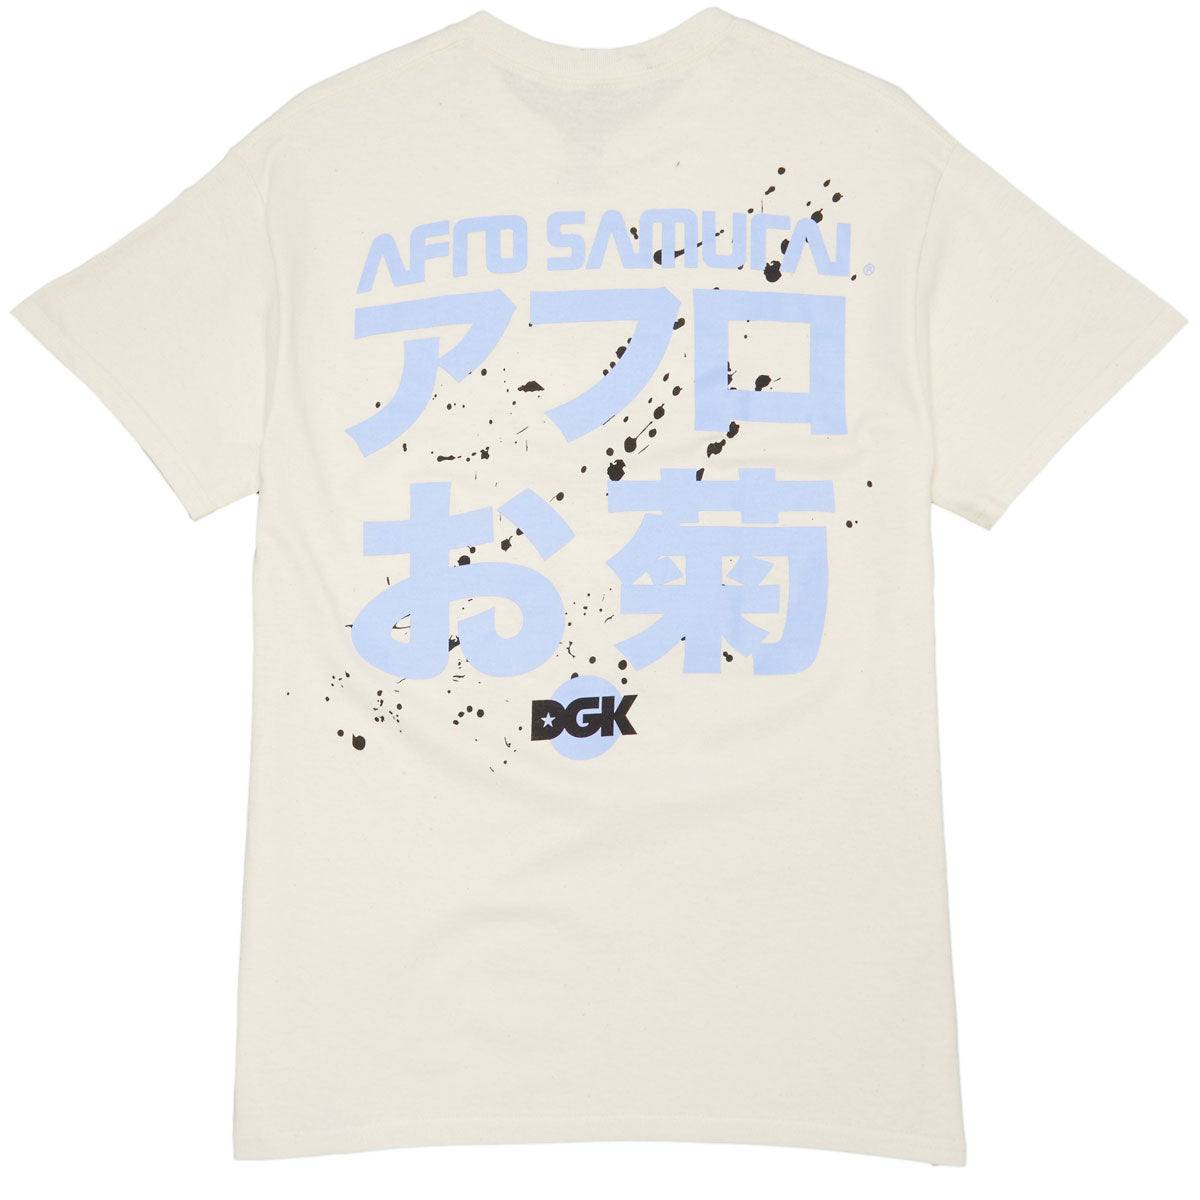 DGK x Afro Samurai Okiku T-Shirt - Sand image 1